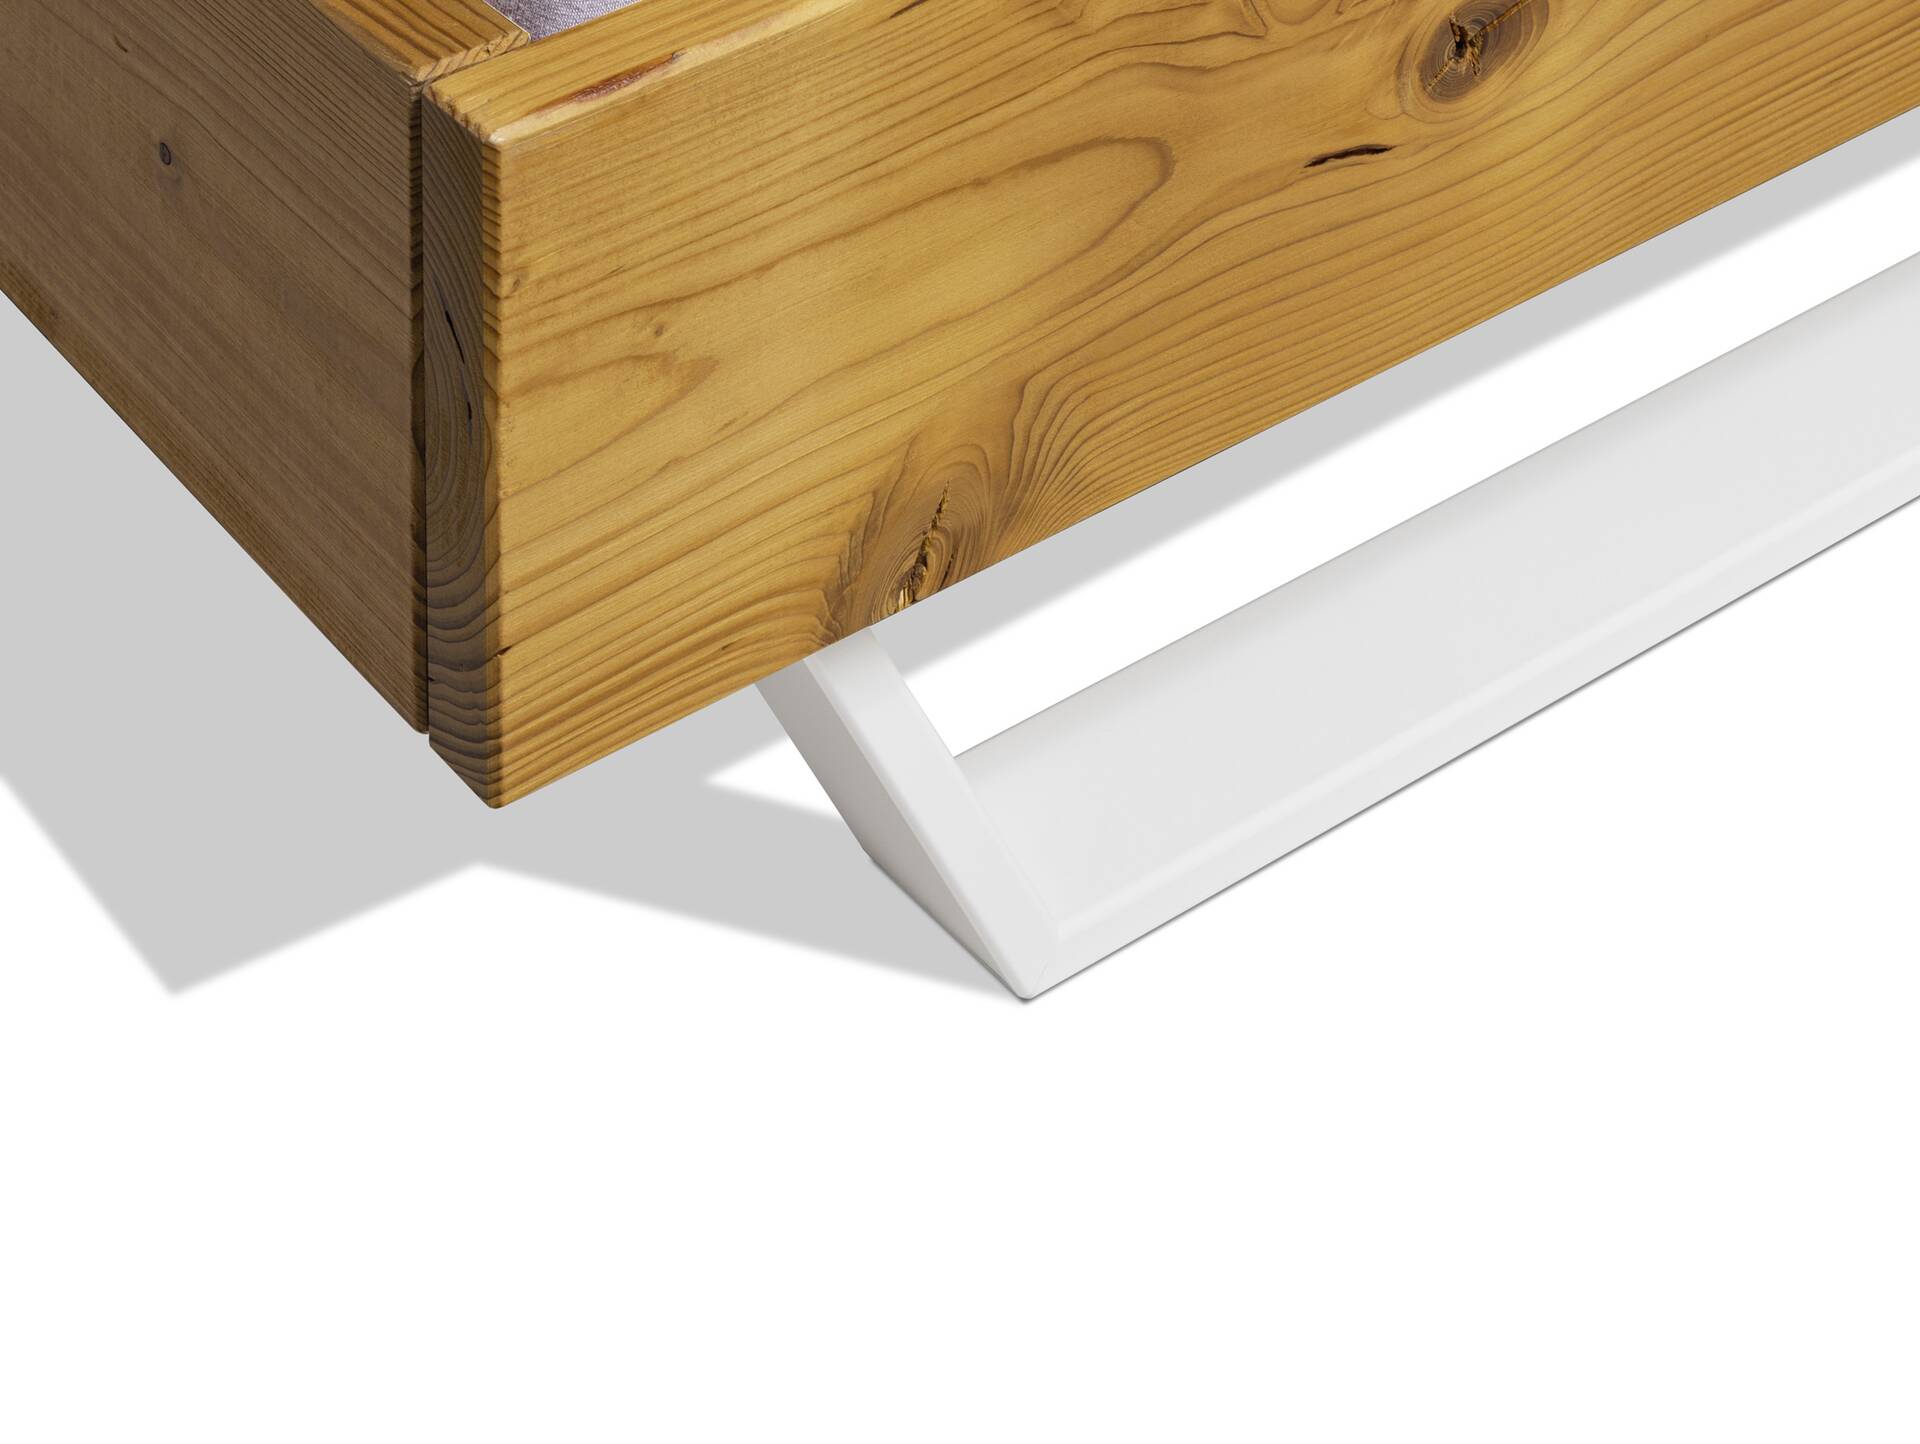 CURBY Kufenbett mit Kopfteil, Material Massivholz, rustikale Altholzoptik, Fichte, Kufen weiß 90 x 200 cm | natur